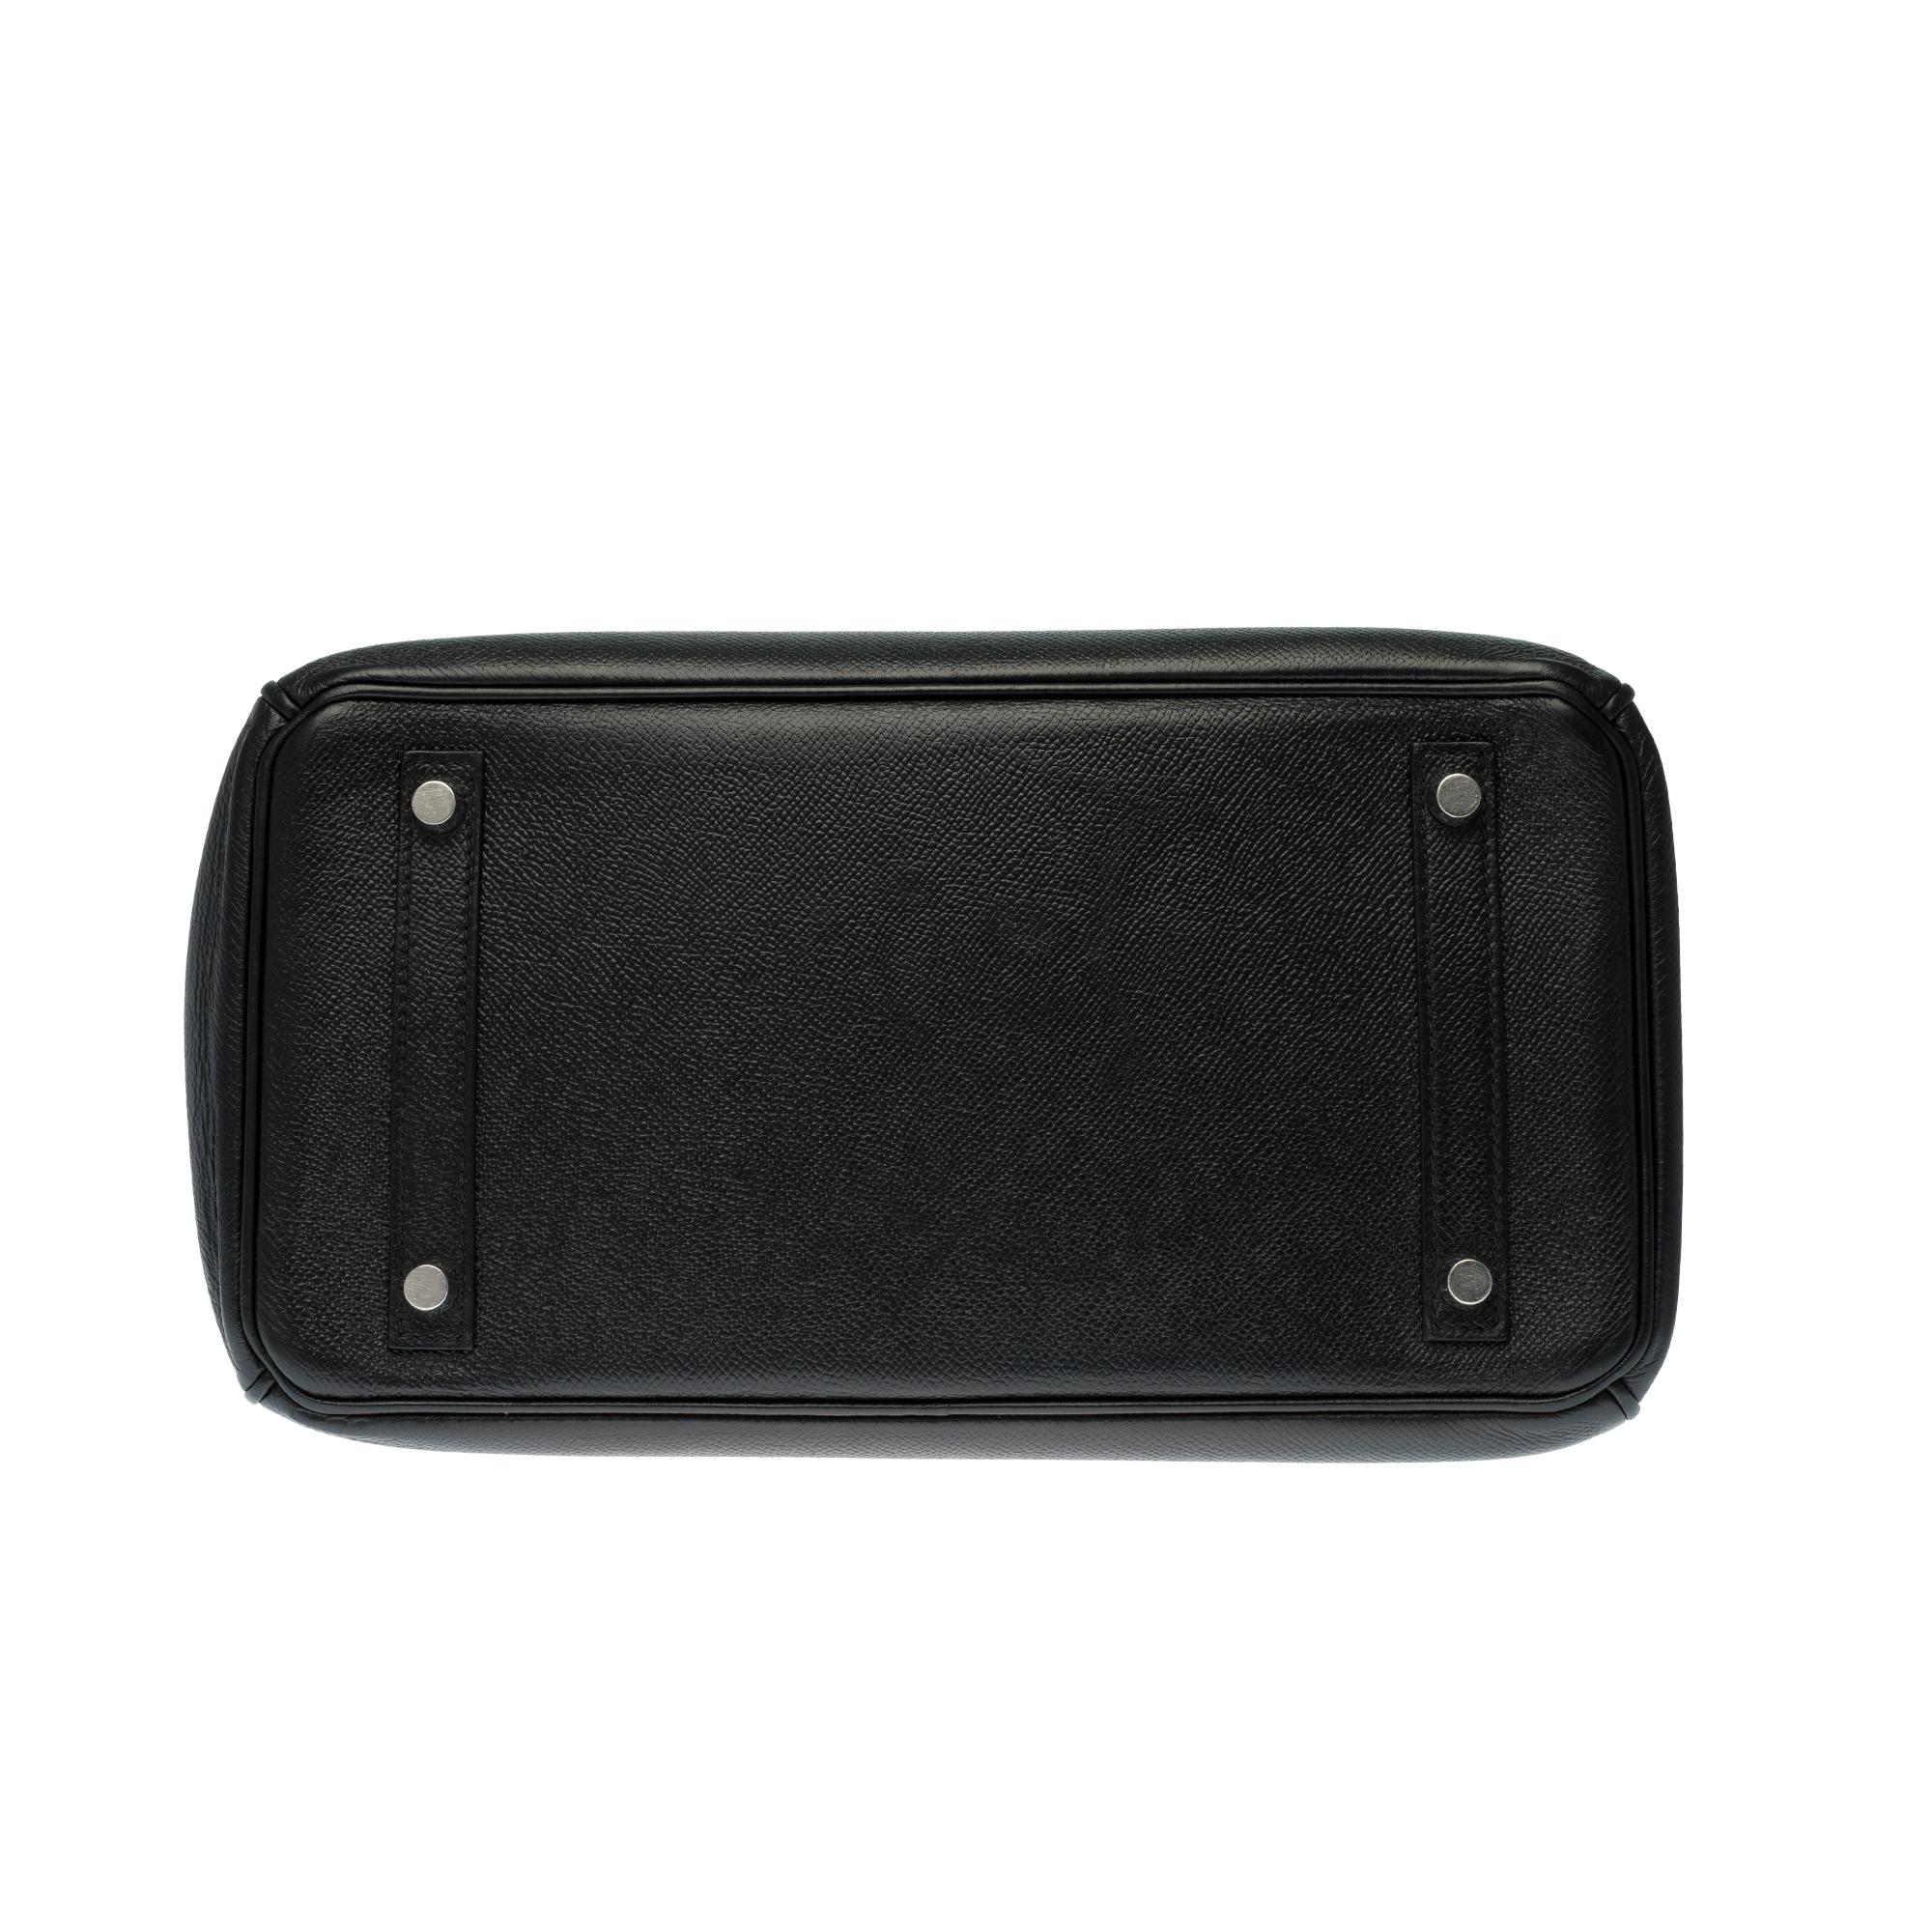 Hermès Birkin 30 handbag in black epsom leather and silver Palladium hardware 2